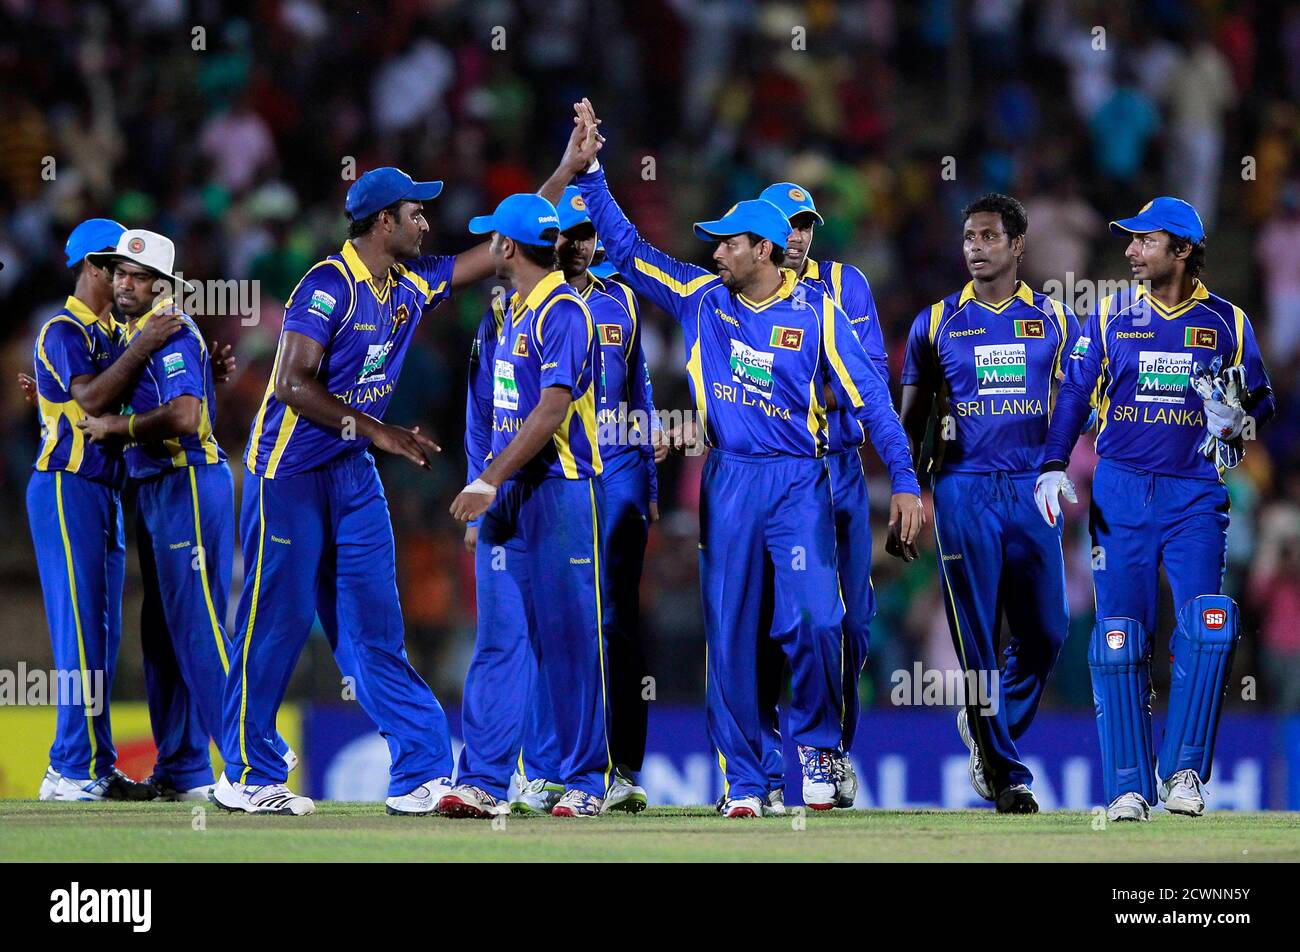 The Sri Lankan cricket team celebrates after winning their first Twenty20 (T20) cricket match against Pakistan in Hambantota, about 240km (149 miles) south of Colombo June 1, 2012. REUTERS/Dinuka Liyanawatte (SRI LANKA - Tags: SPORT CRICKET) Stock Photo